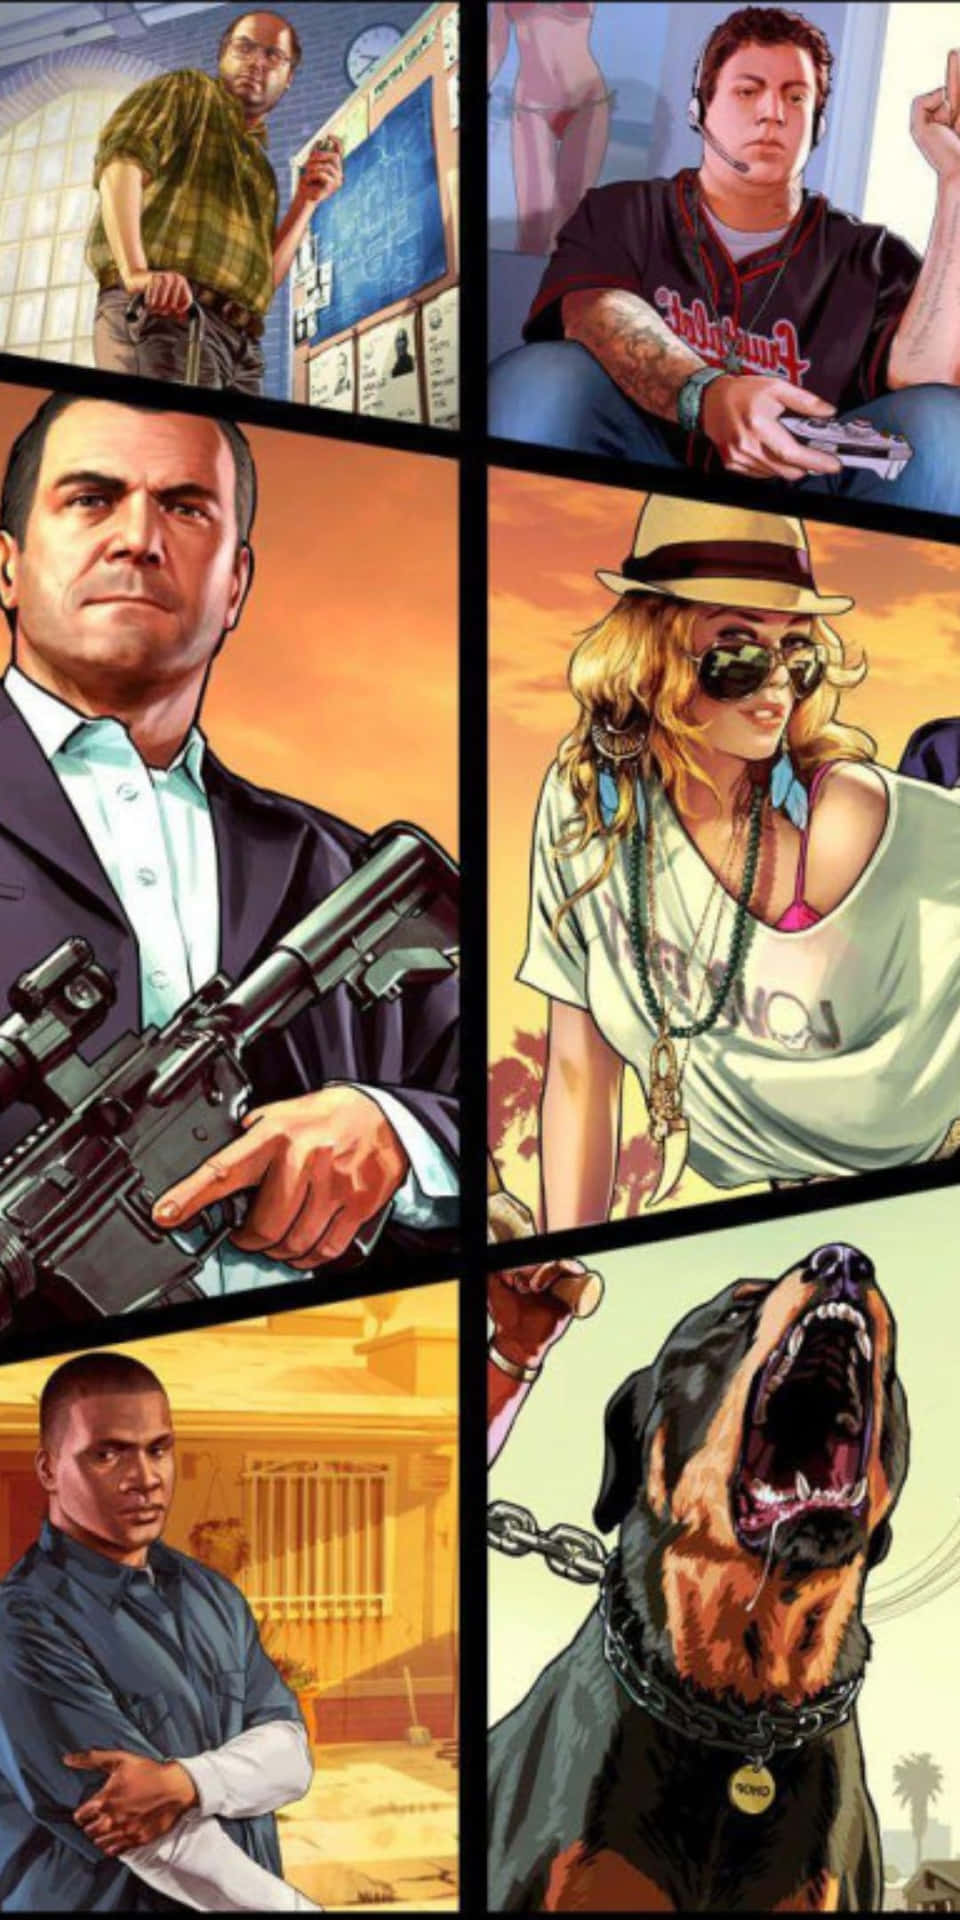 Pixel3 Grand Theft Auto V Bakgrundsbild.